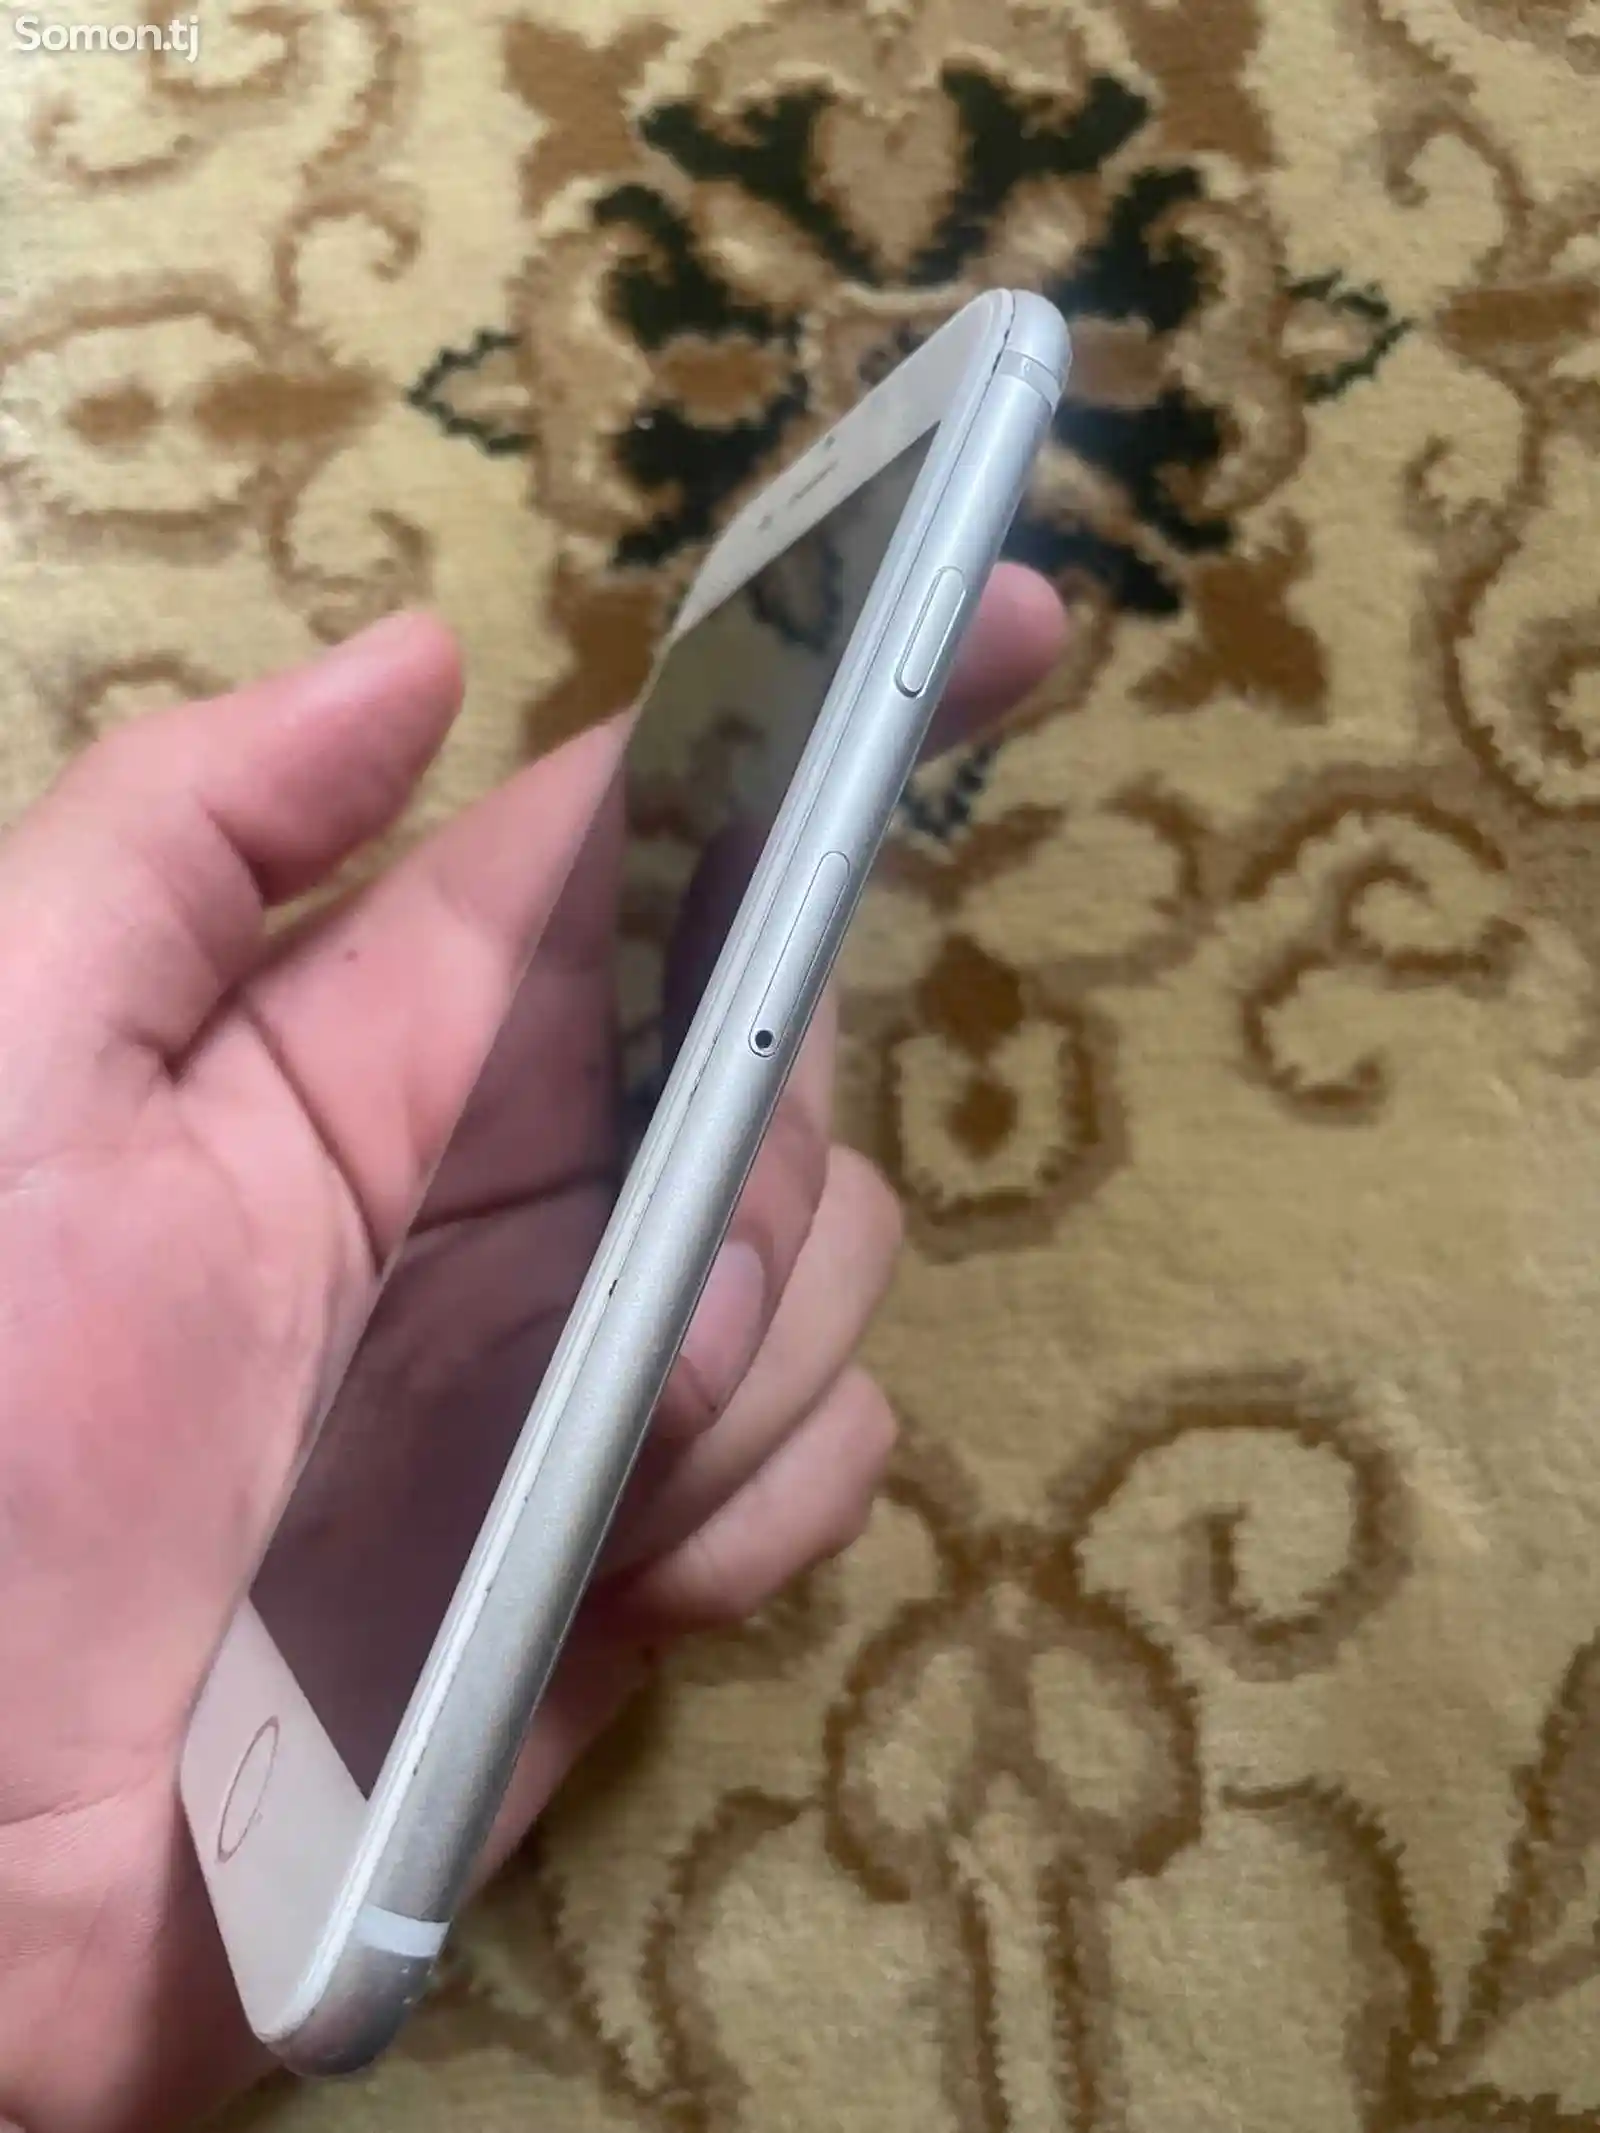 Apple iPhone 8, 64 gb, Silver-2